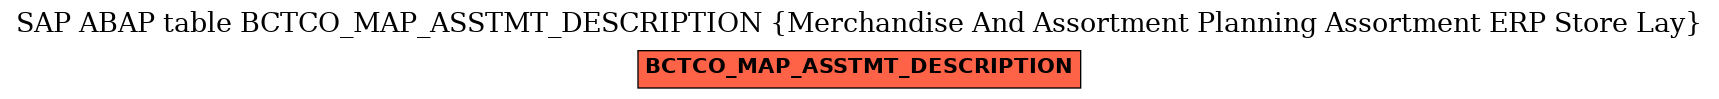 E-R Diagram for table BCTCO_MAP_ASSTMT_DESCRIPTION (Merchandise And Assortment Planning Assortment ERP Store Lay)